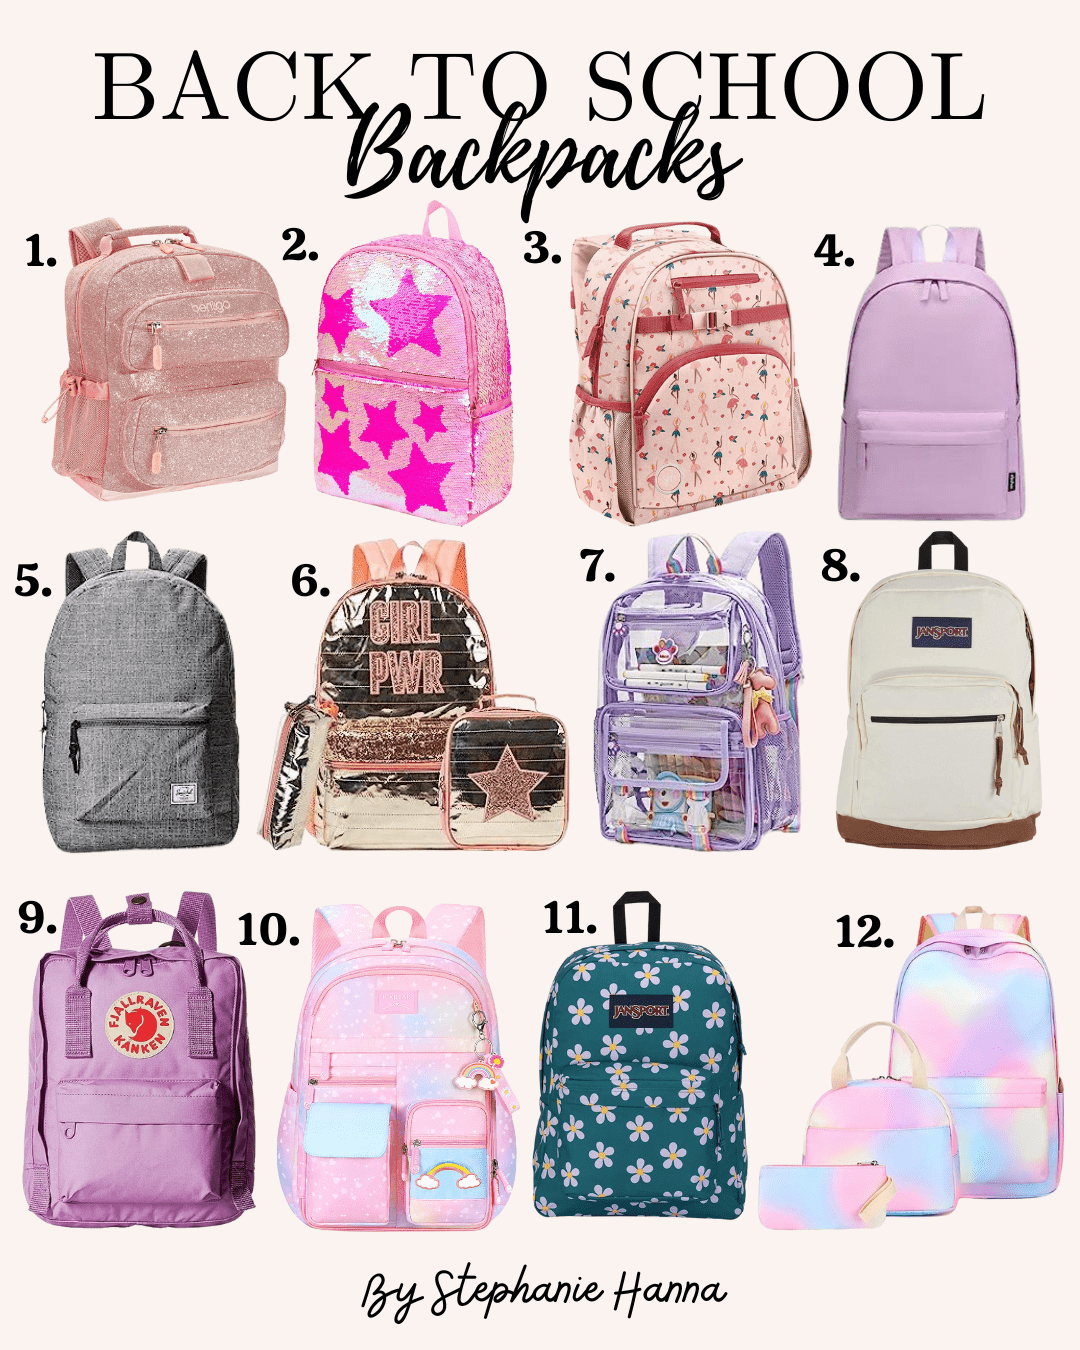 Back To School Backpacks for Girls - Stephanie Hanna Blog